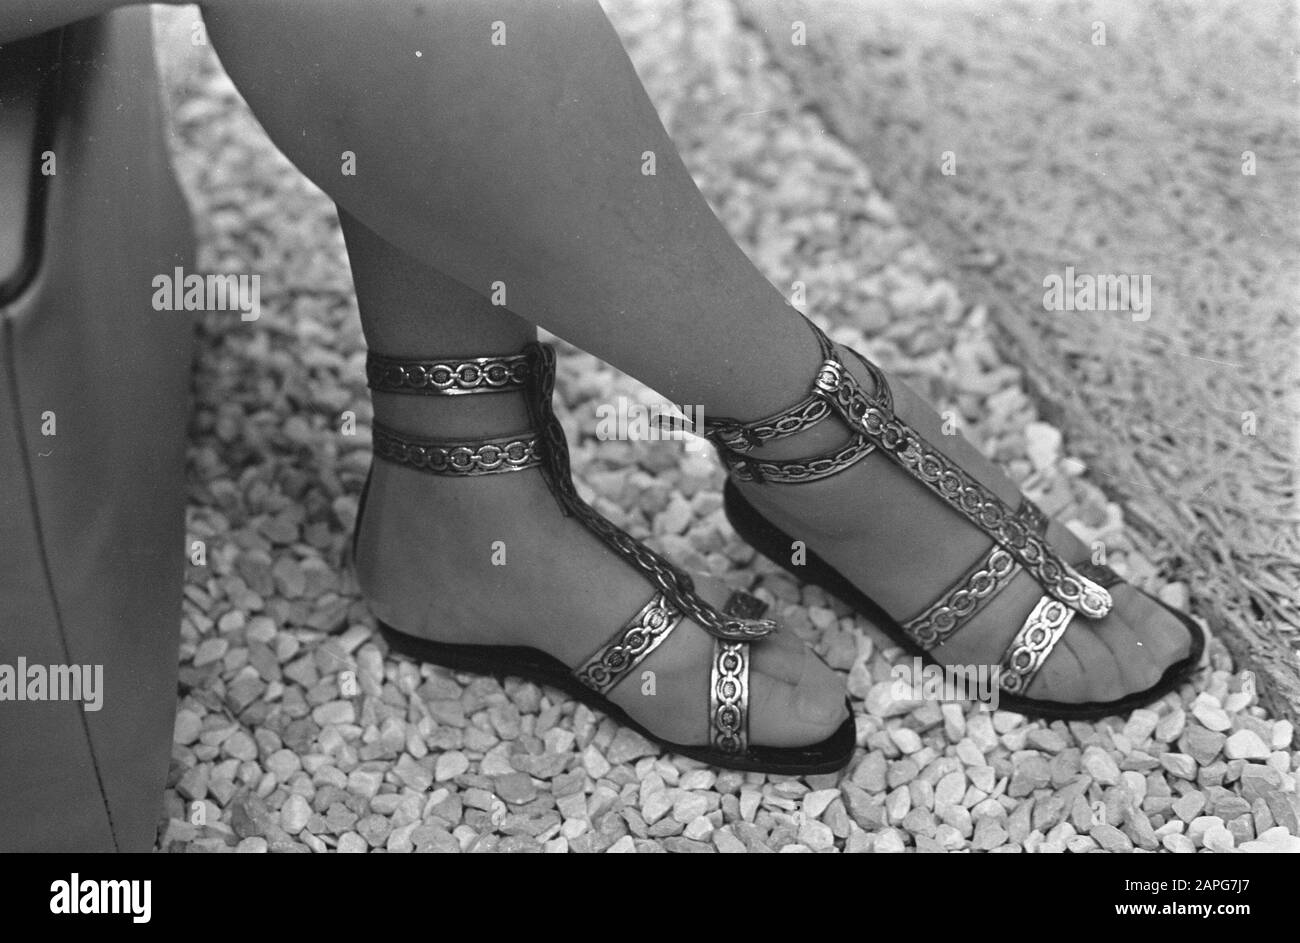 Utrechtse Jaarbeurs Description: Cleopatra a leather sandal in gold or silver color Date: January 8, 1968 Keywords: sandals Stock Photo